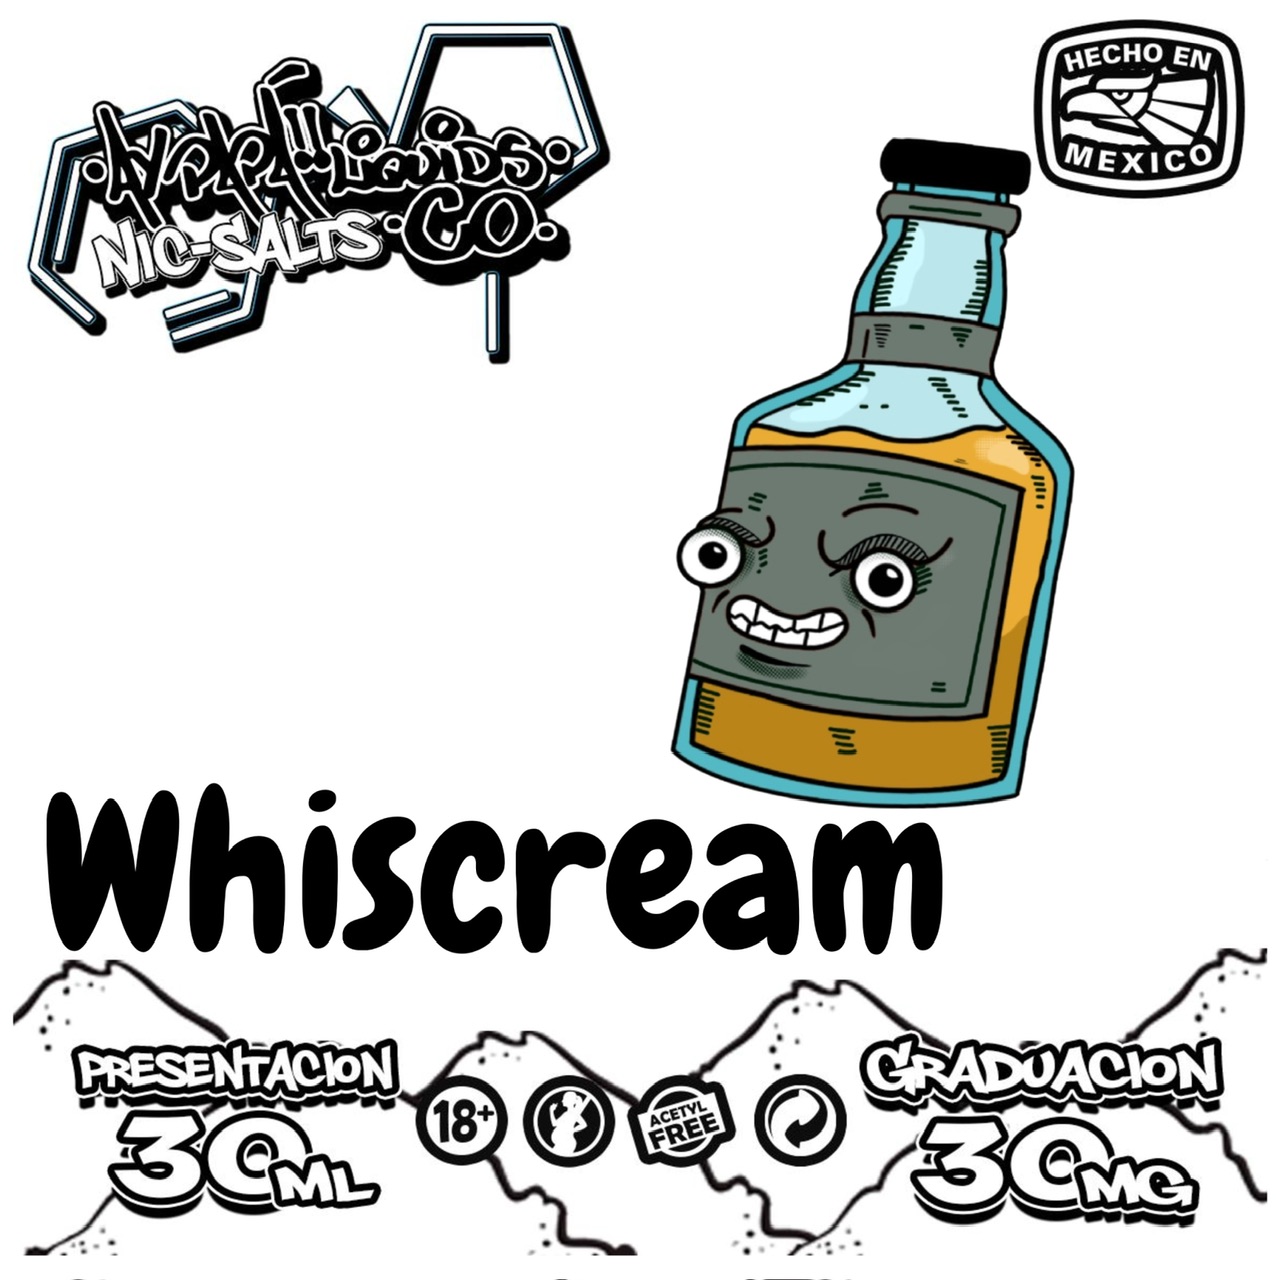 Whiscream Nicsalt